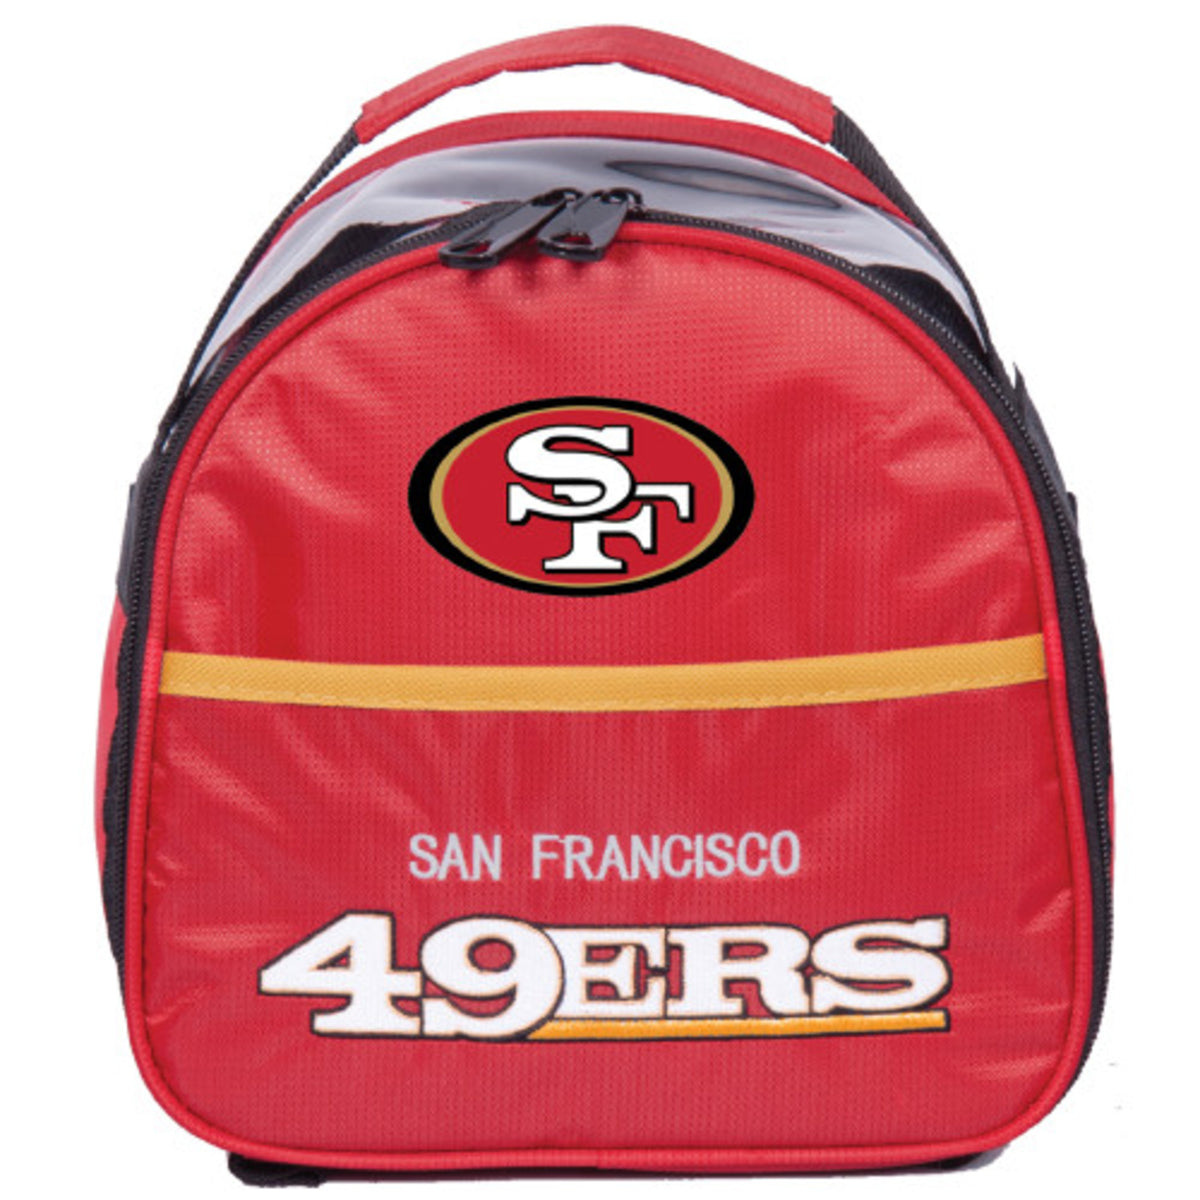 San Francisco 49ers Add On Bag